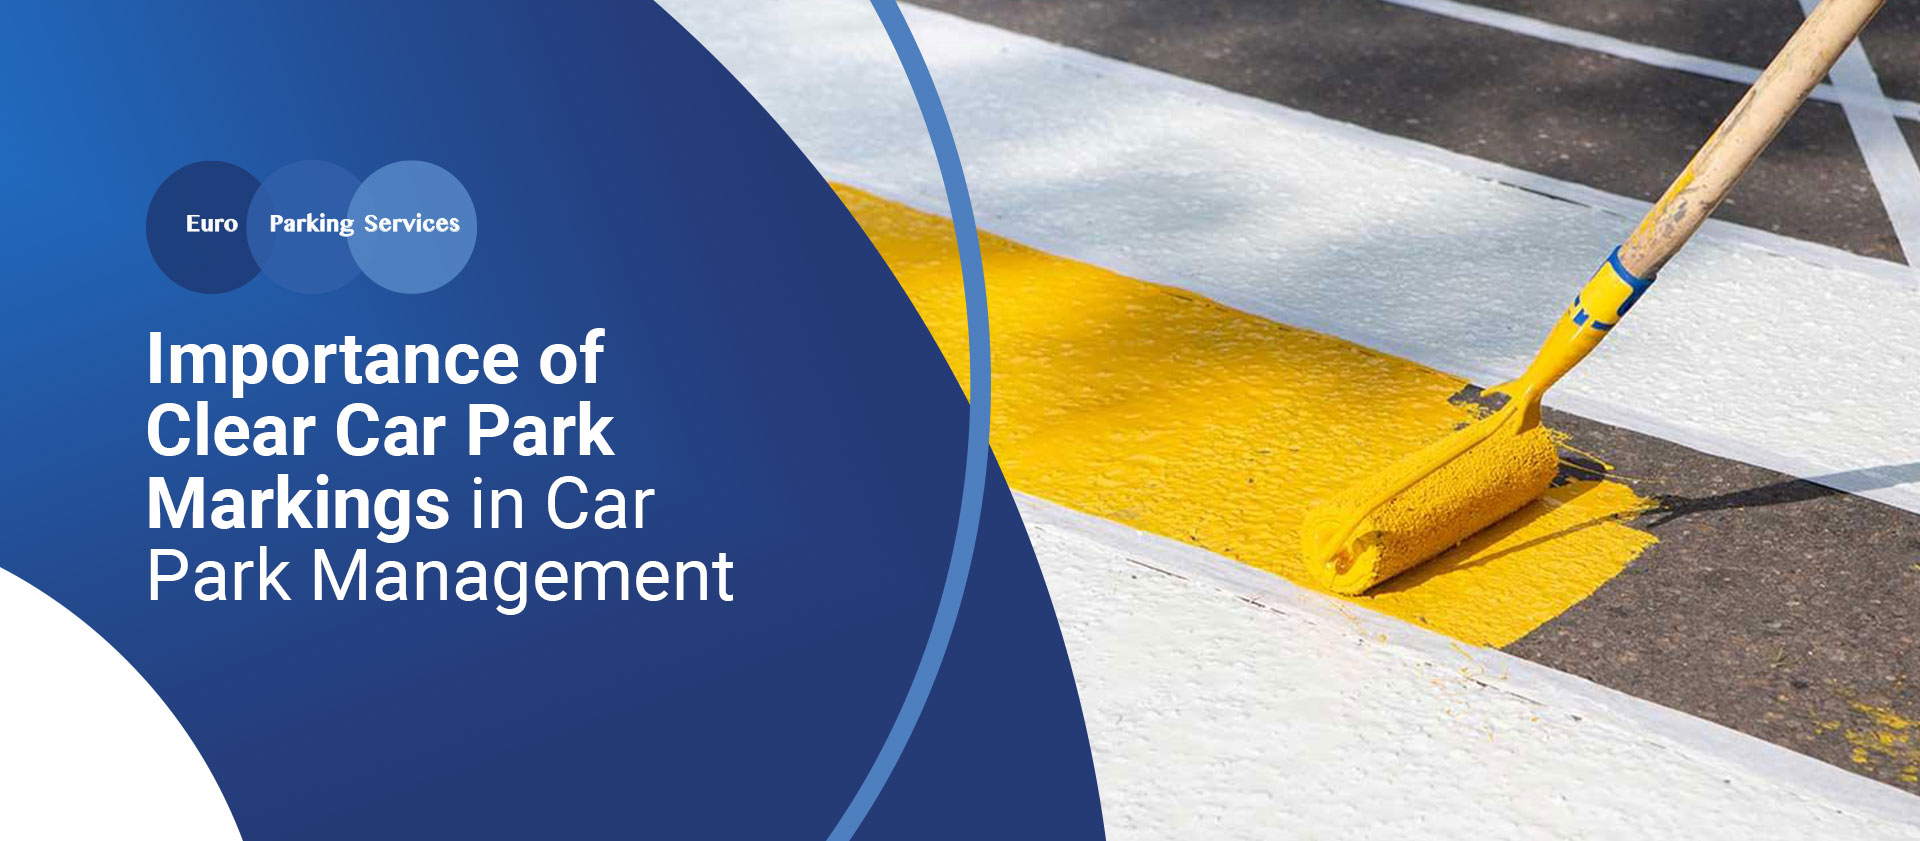 Car Park Markings in Car Park Management 